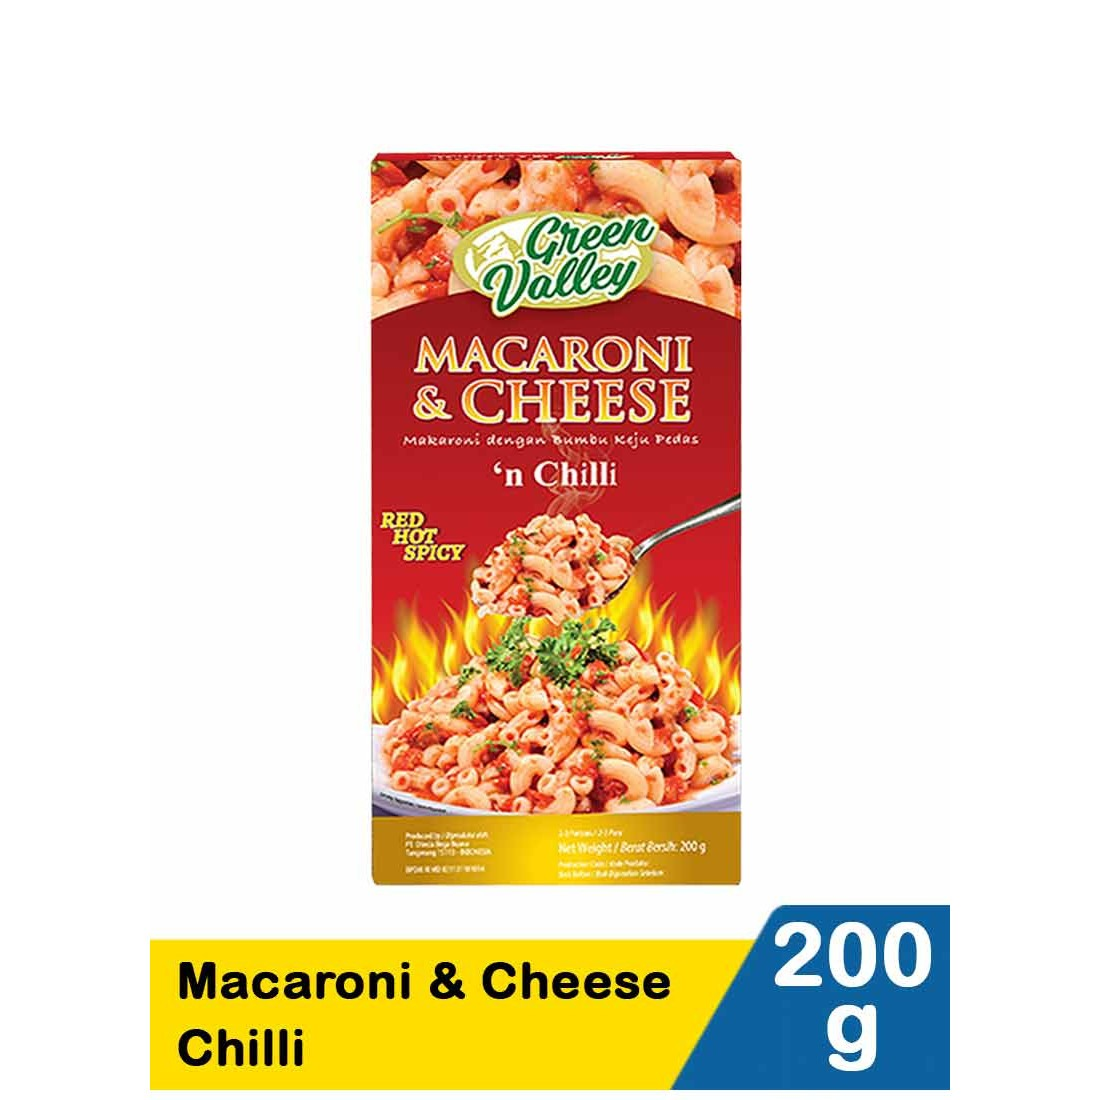 Green Valley 200G Macaroni & Cheese Chilli